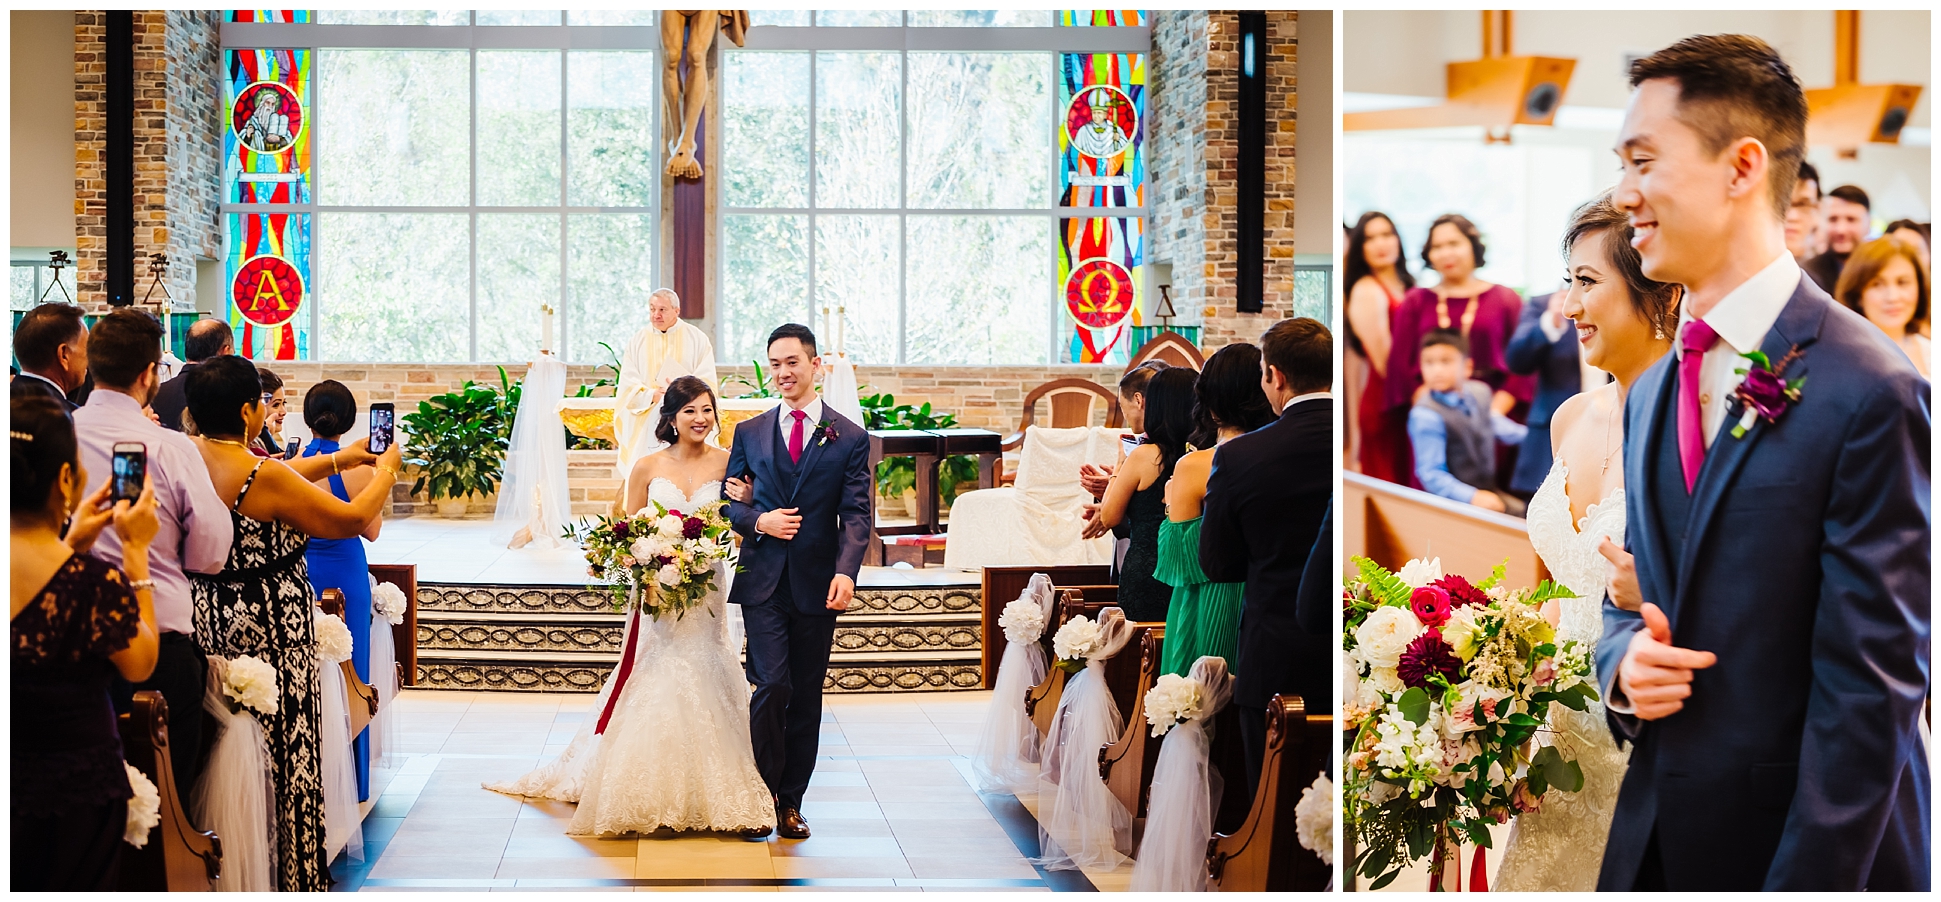 tampa-wedding-photographer-philipino-colorful-woods-ballroom-church-mass-confetti-fuscia_0038.jpg